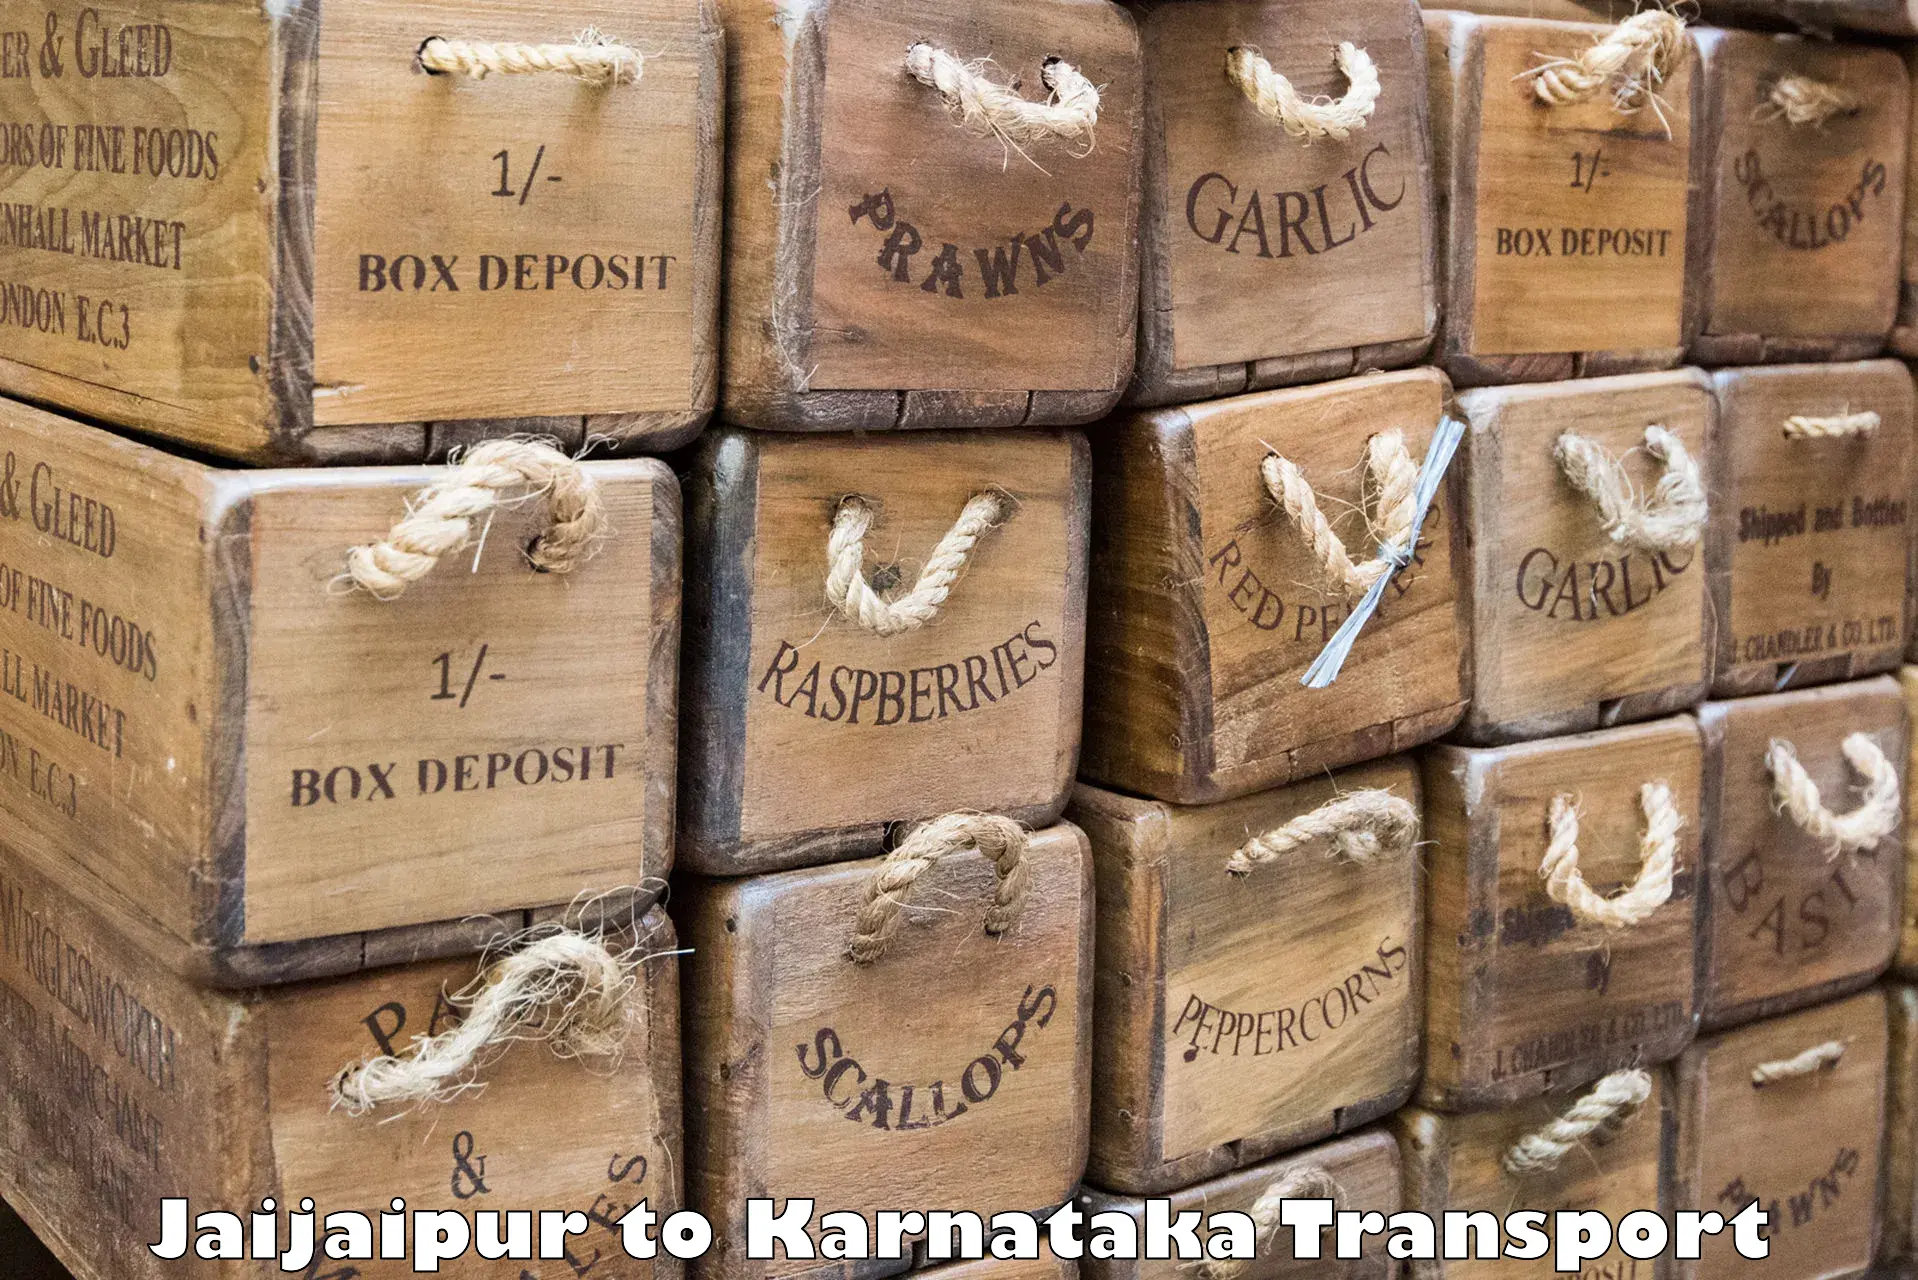 Container transport service Jaijaipur to Dakshina Kannada